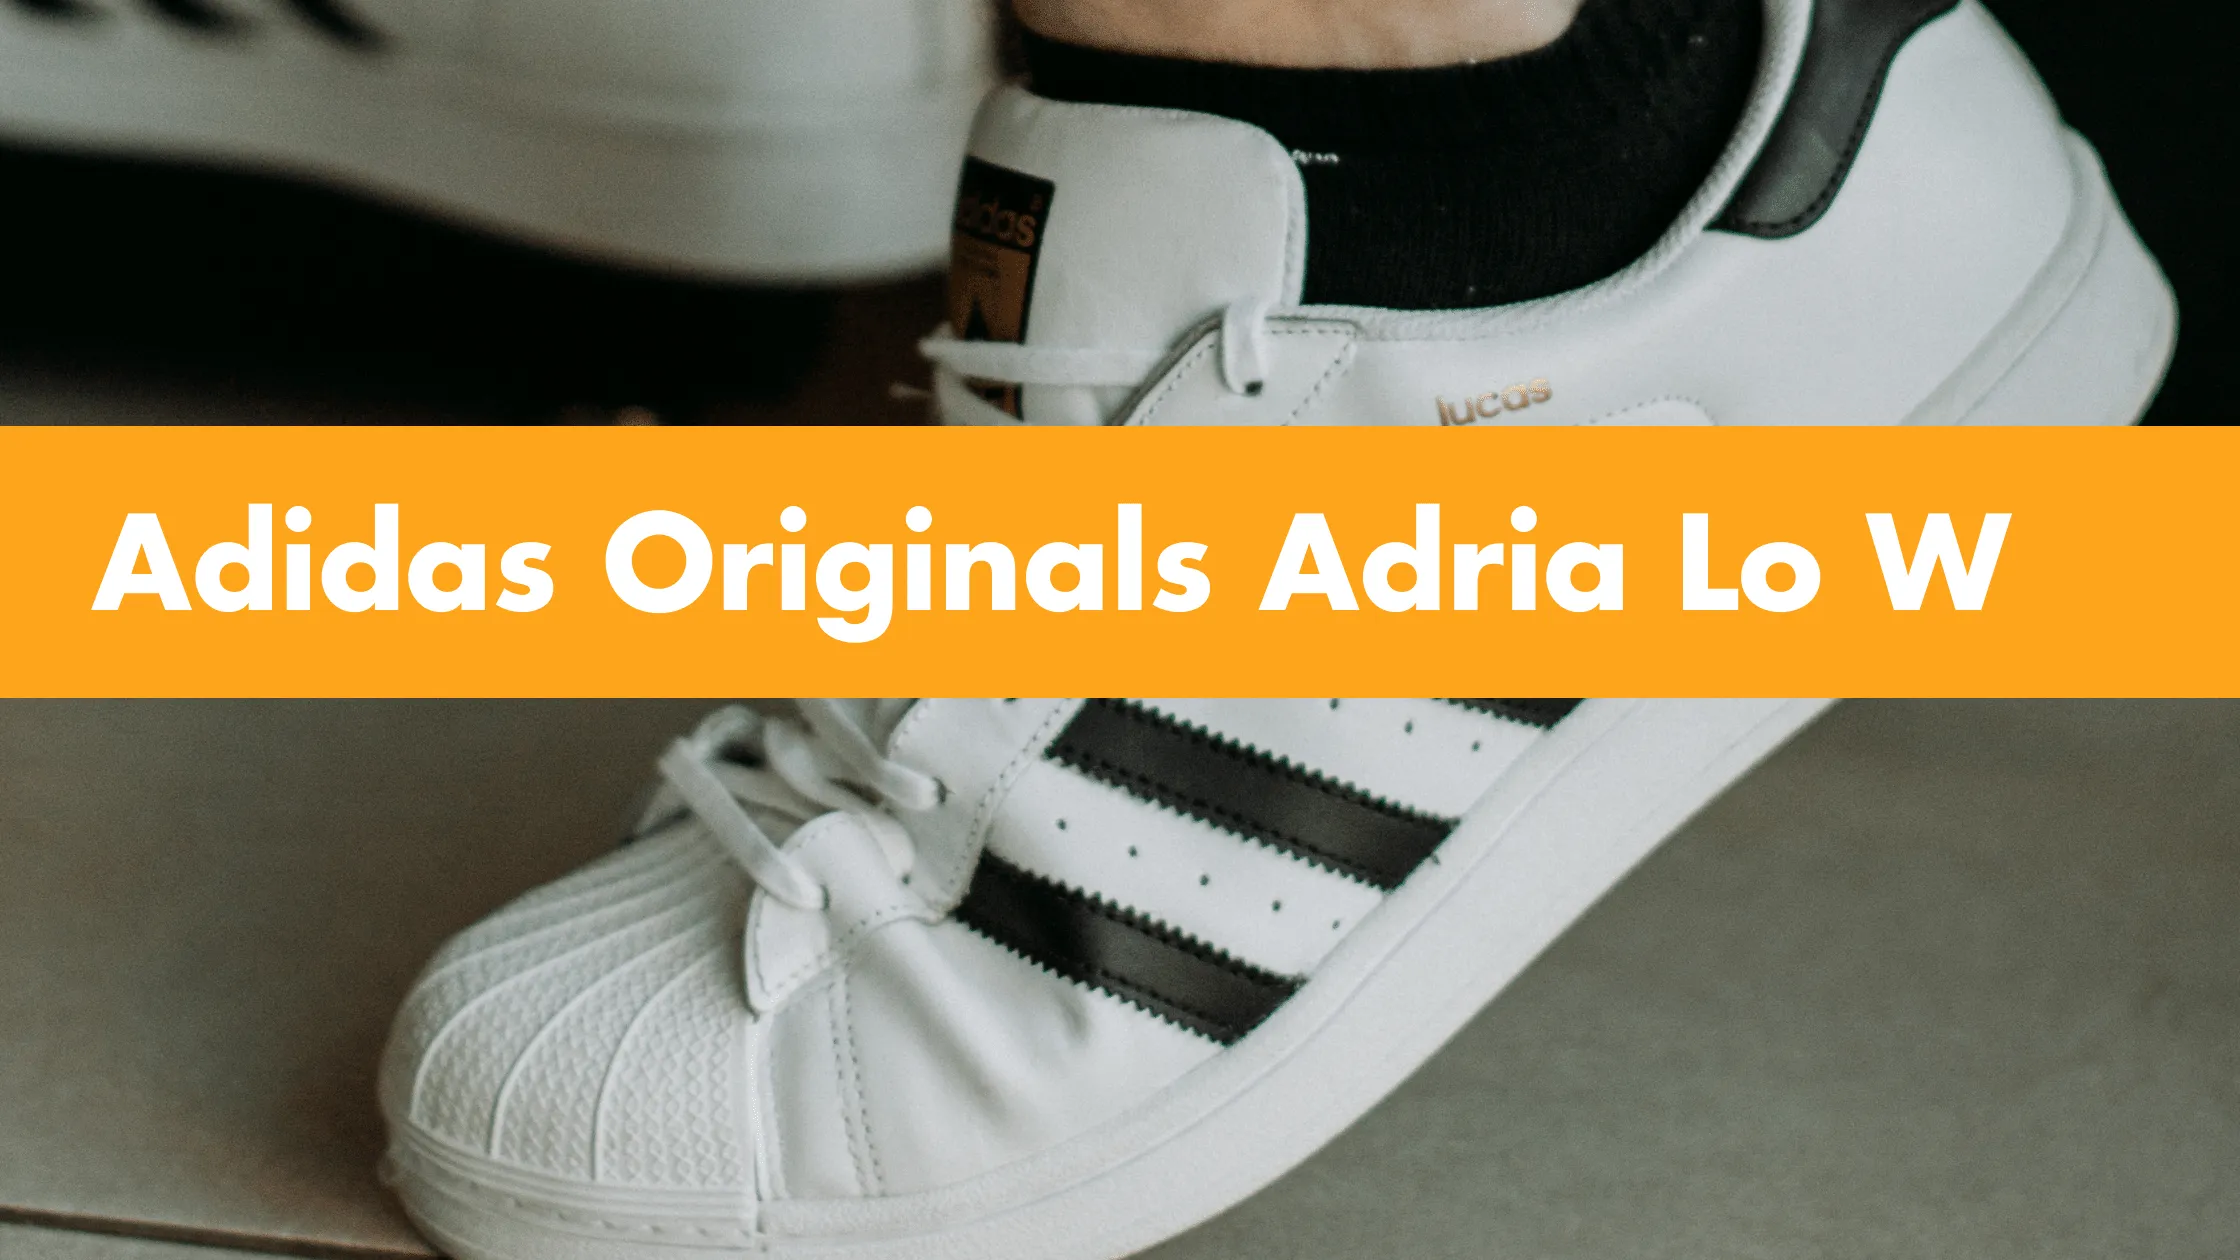 Adidas Originals Adria Lo W